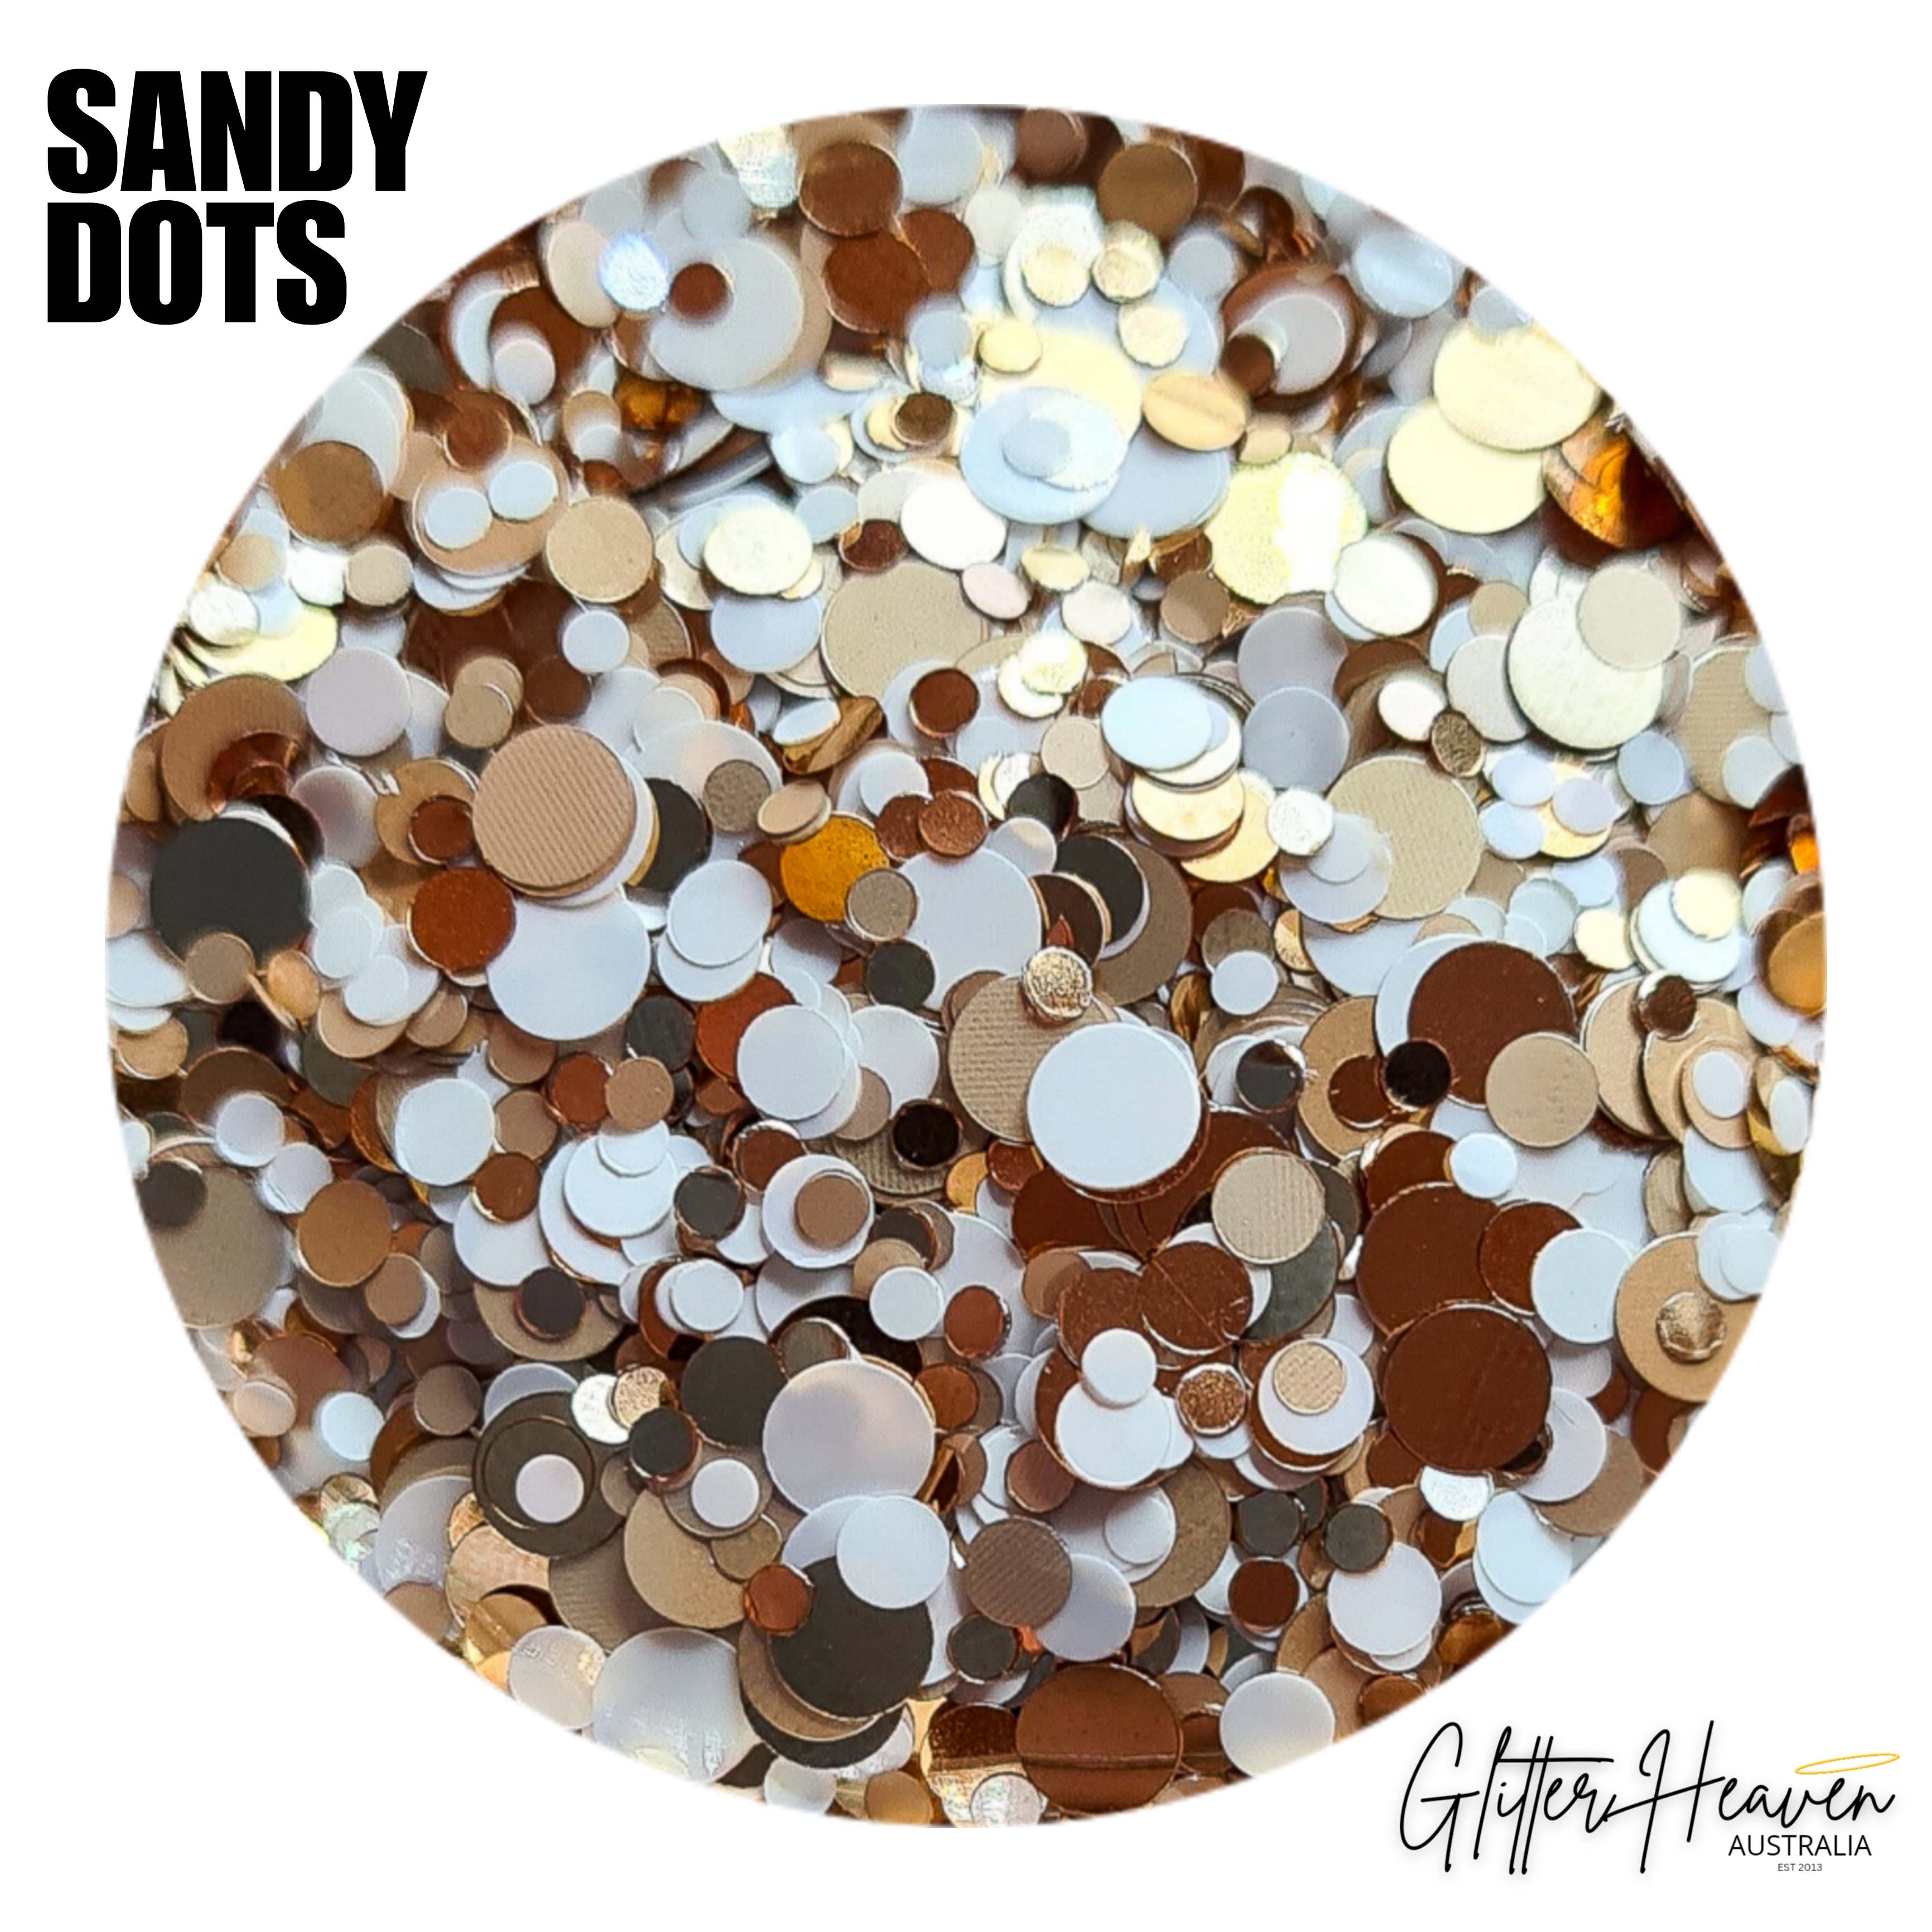 Sandy Dots